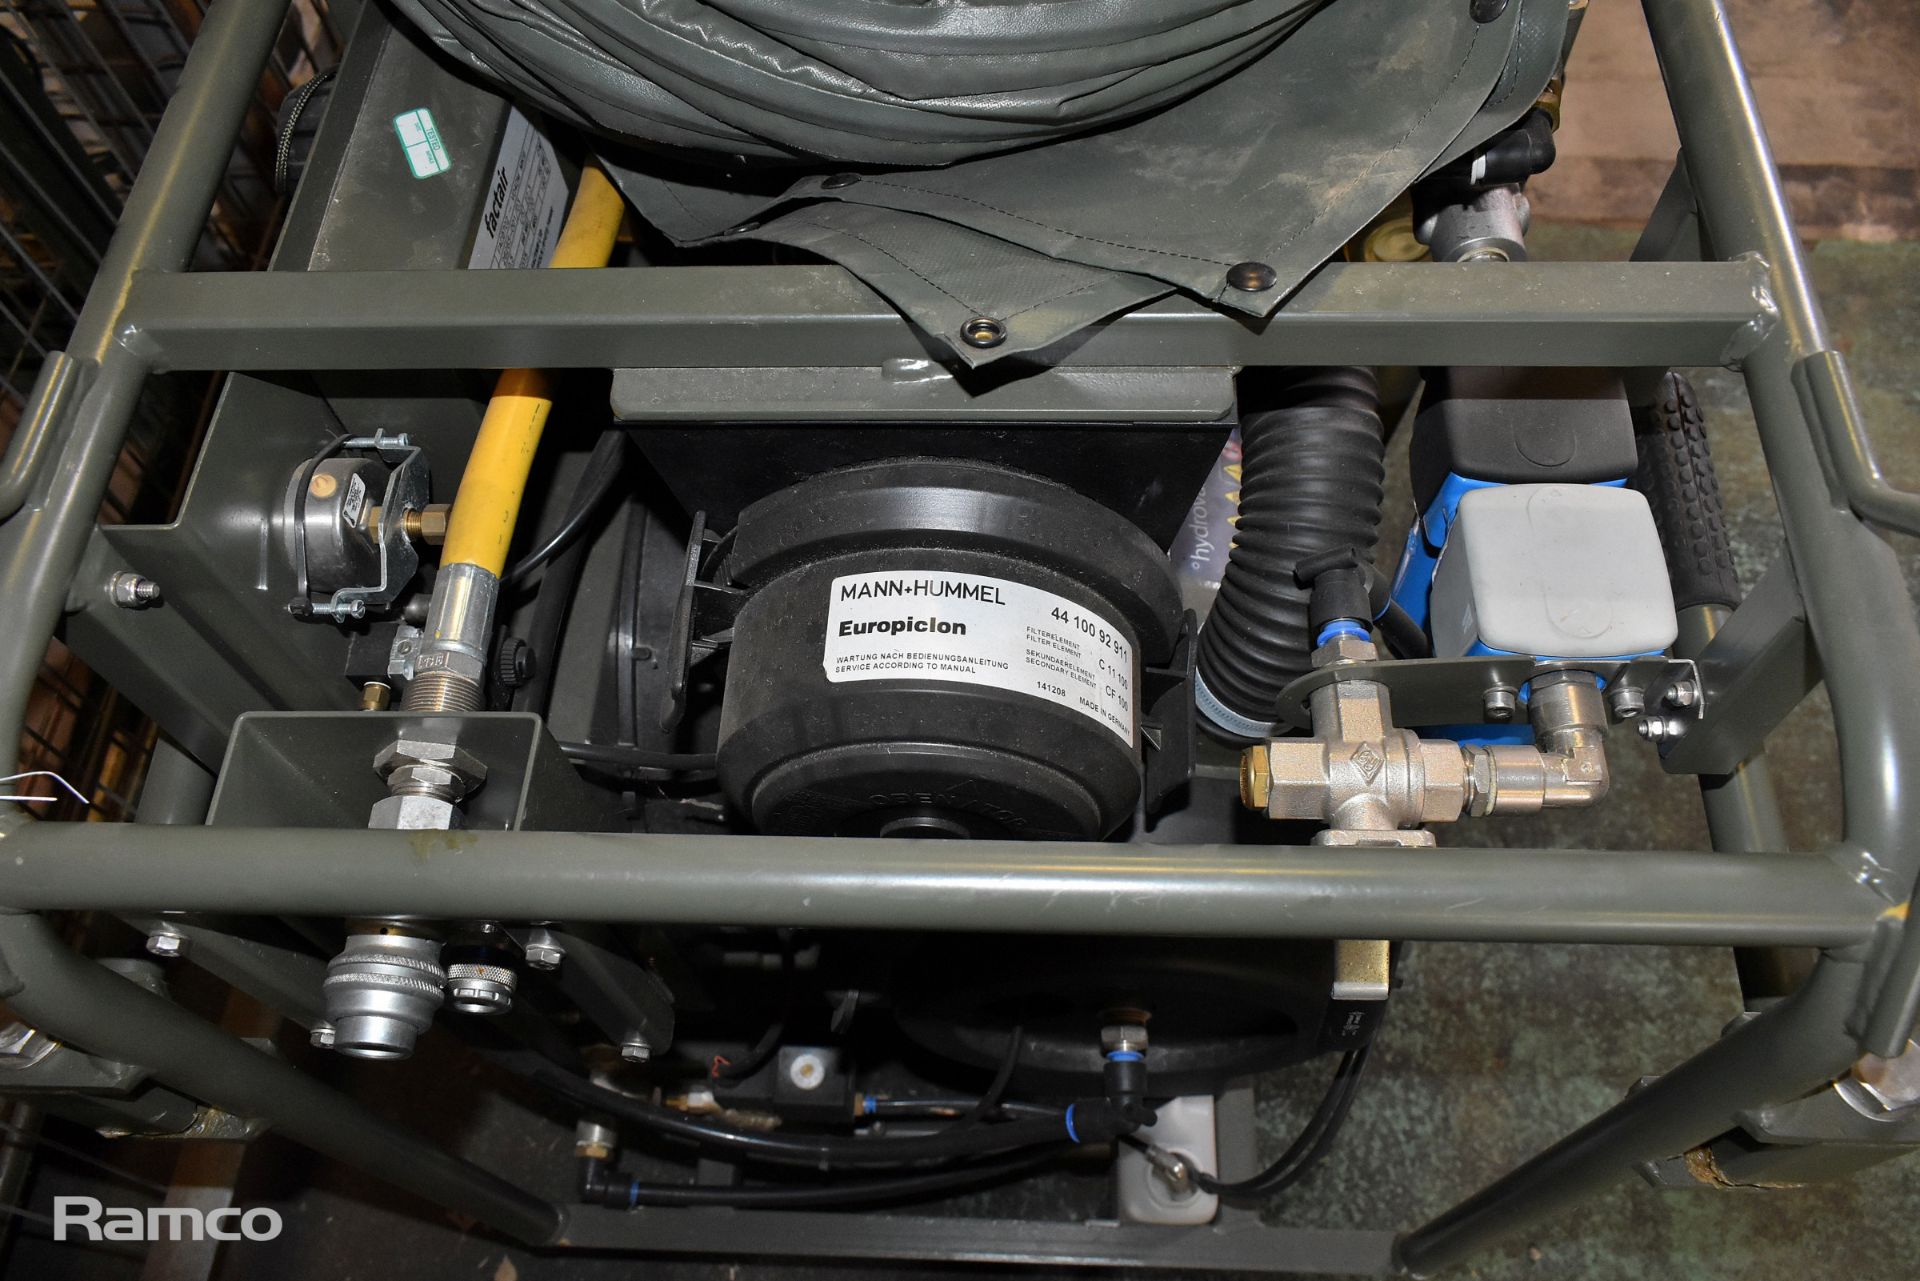 Factair Hydrovane HV04 Diesel Air Compressor - model 504C10-NSP1962 - Image 6 of 14